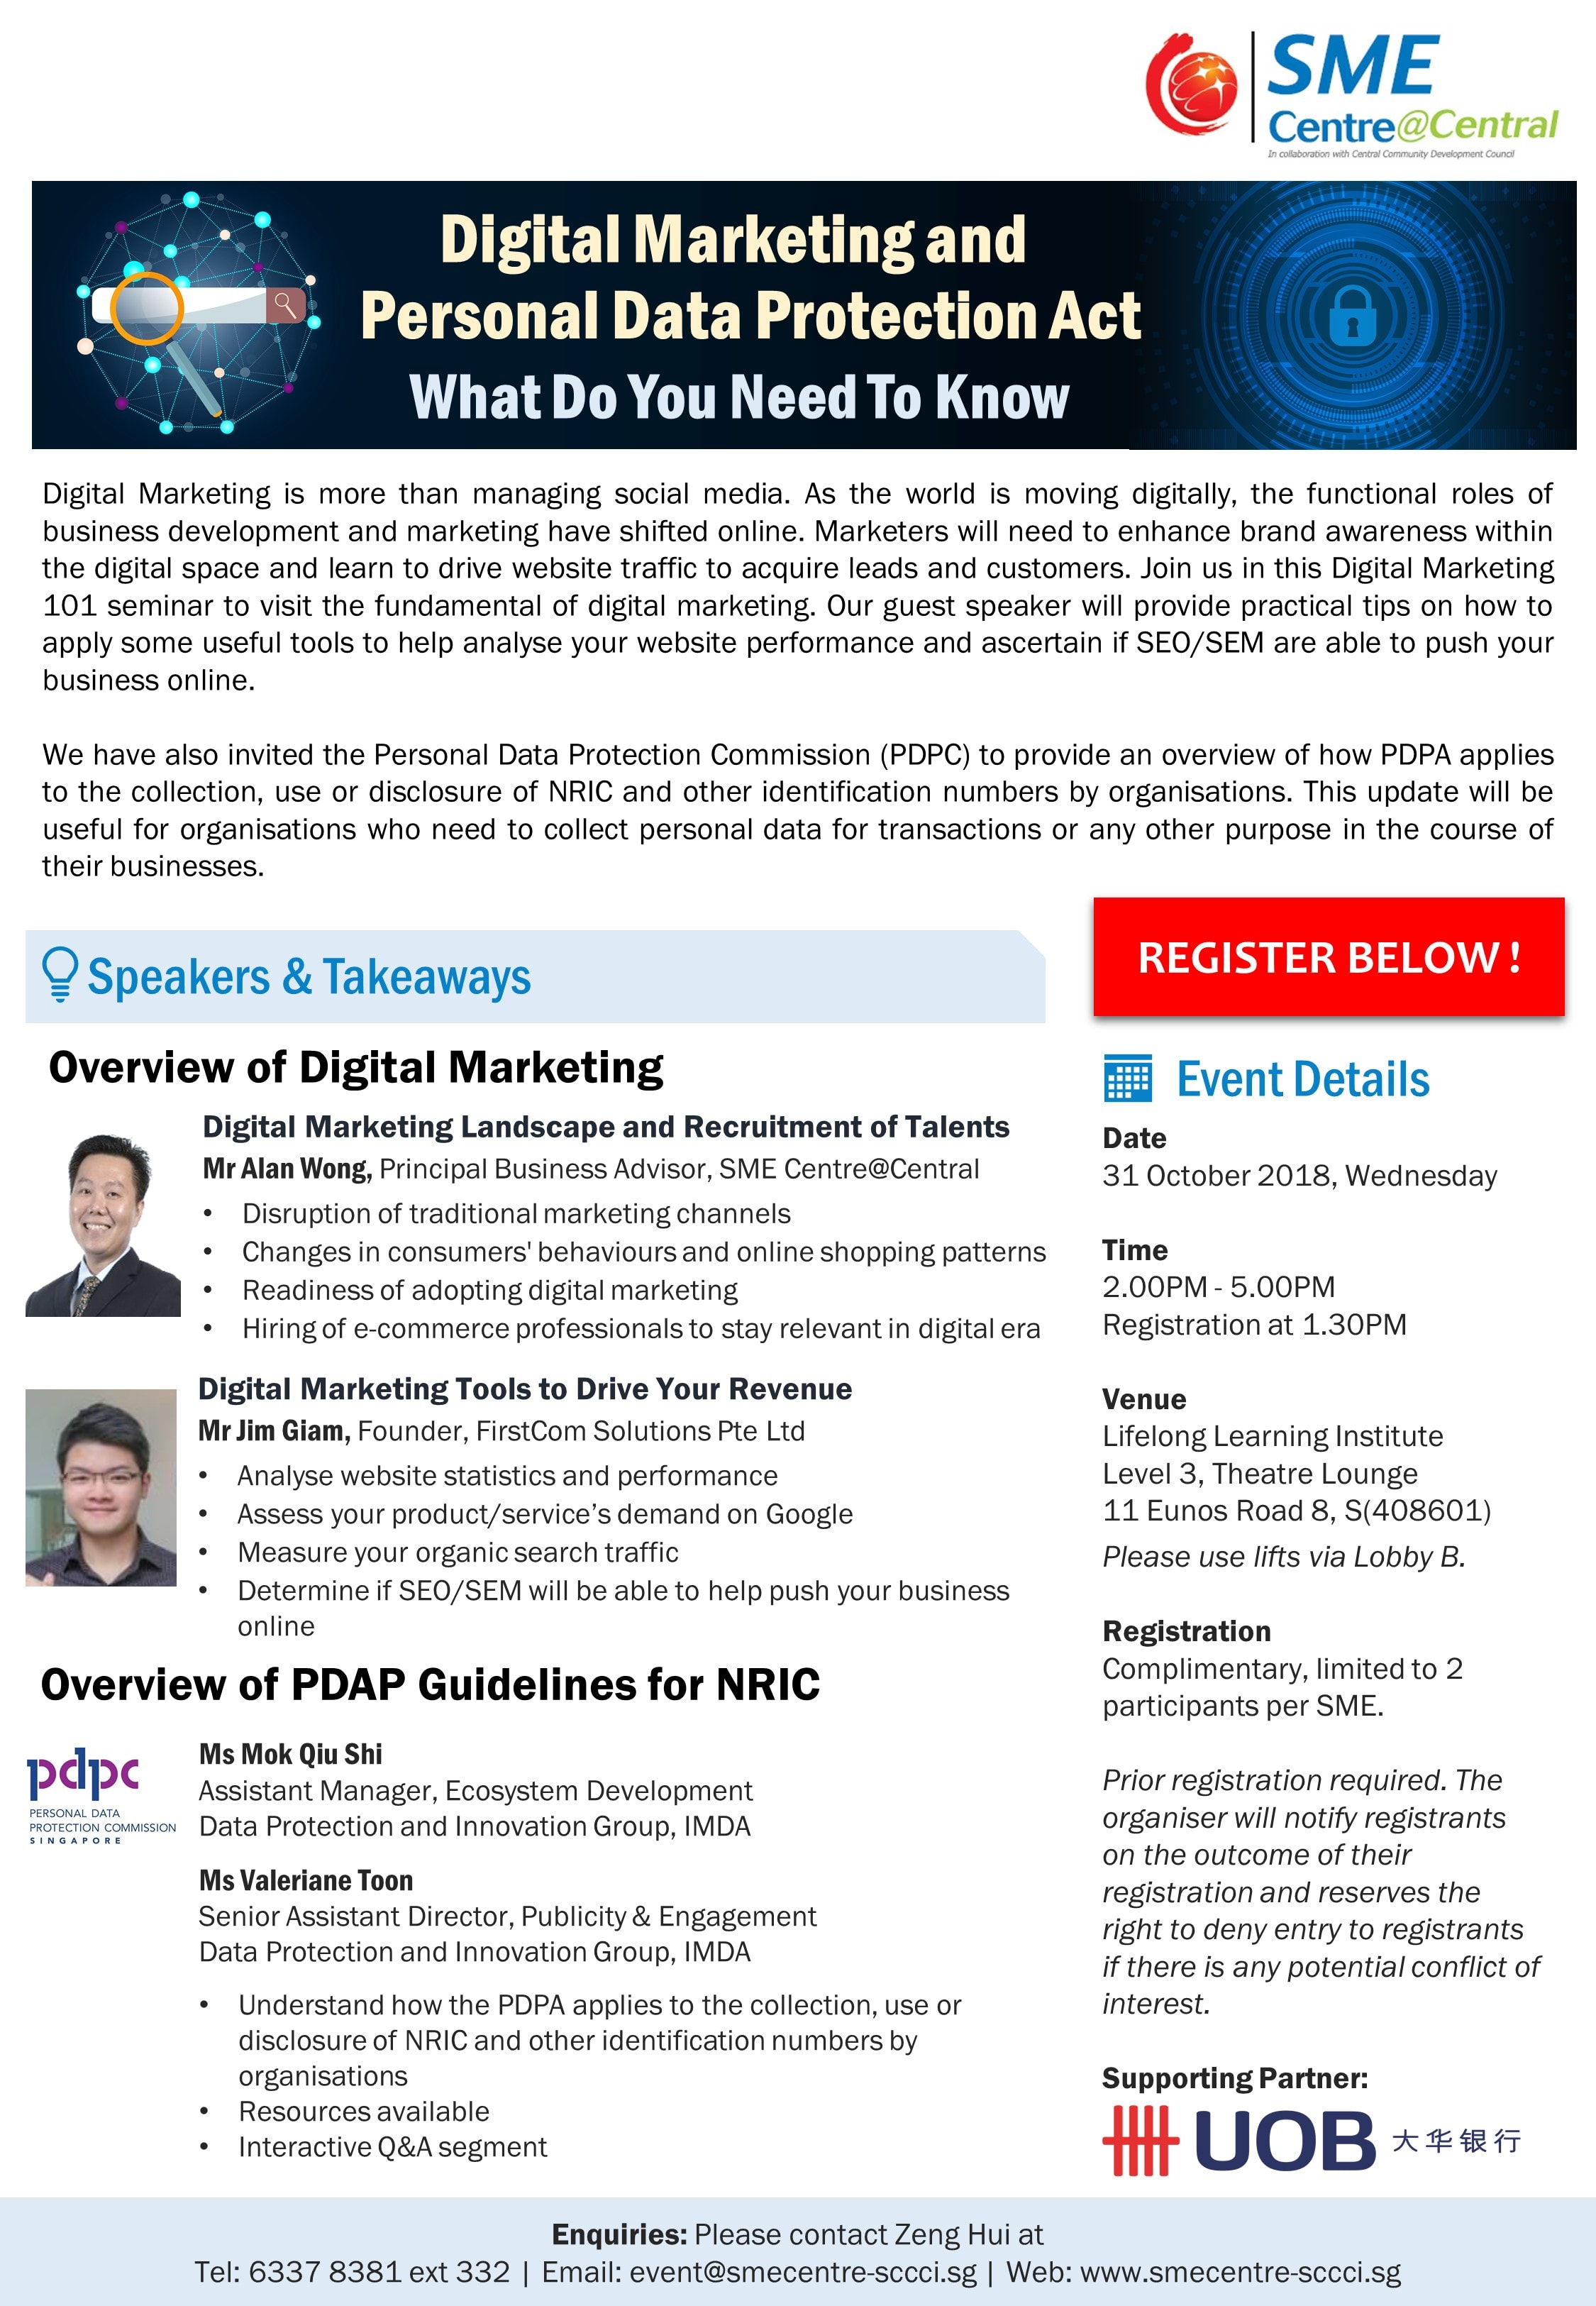 Digital Marketing and PDPA Workshop